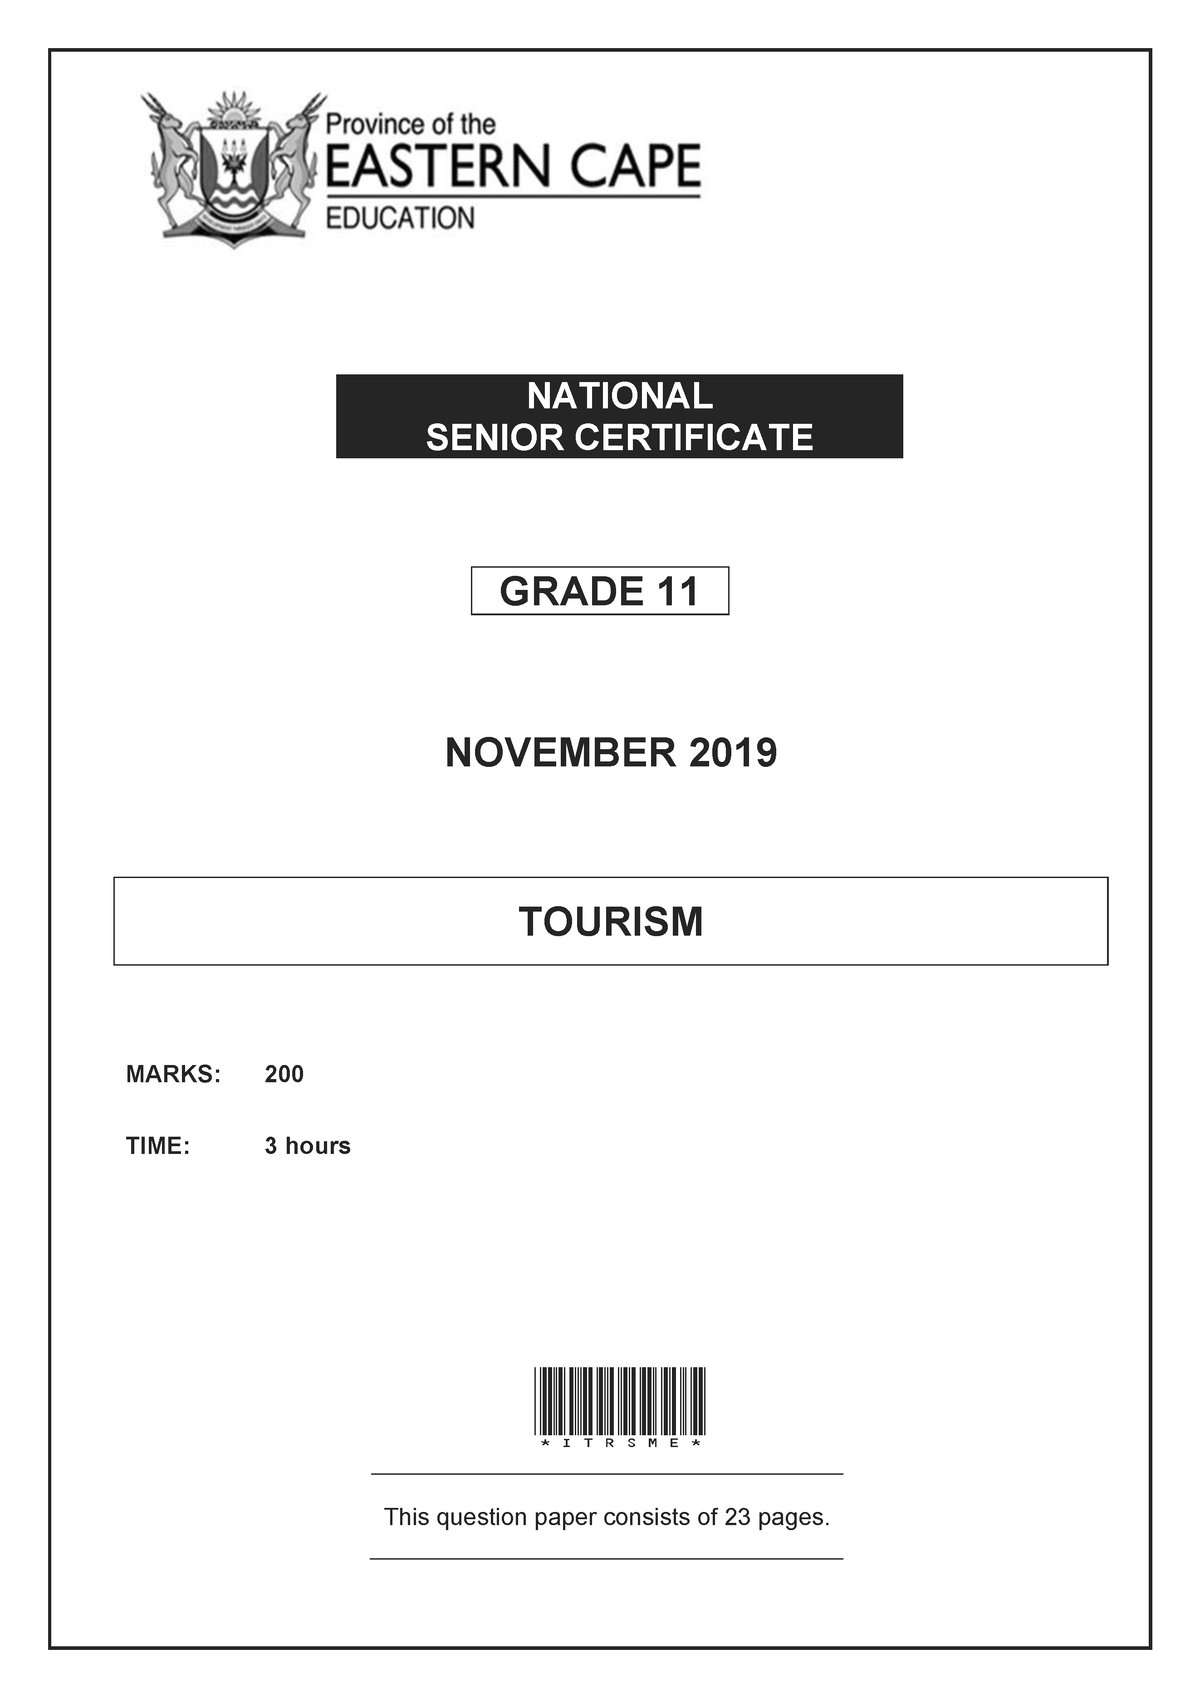 tourism pat grade 10 2022 memorandum pdf